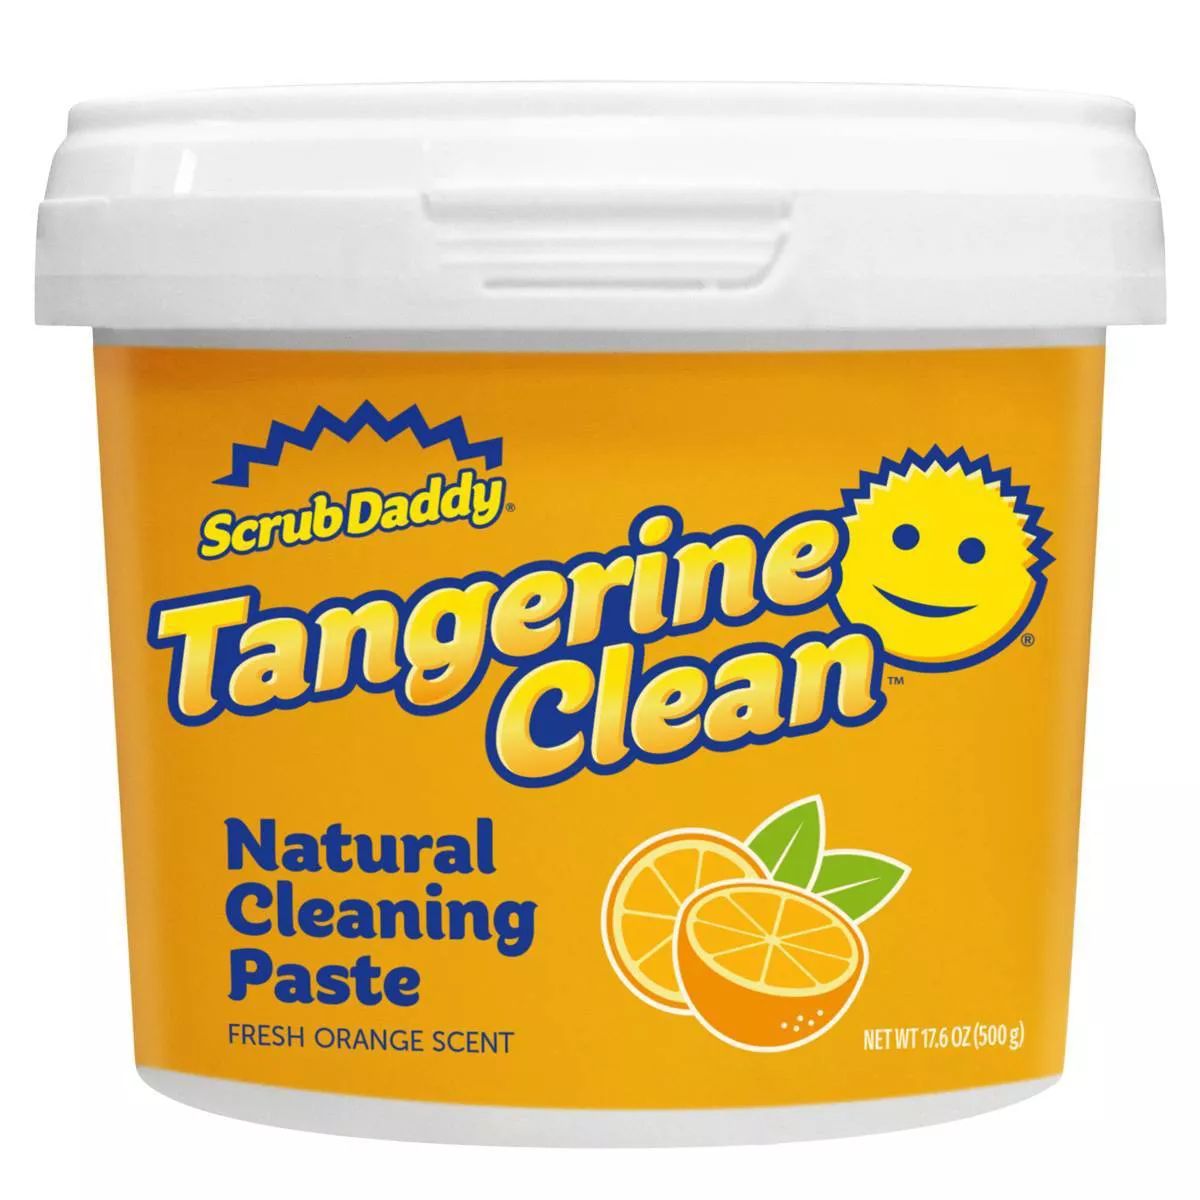 Scrub Daddy Tangerine Clean Natural Cleaning Paste - Fresh Orange Scent | Target